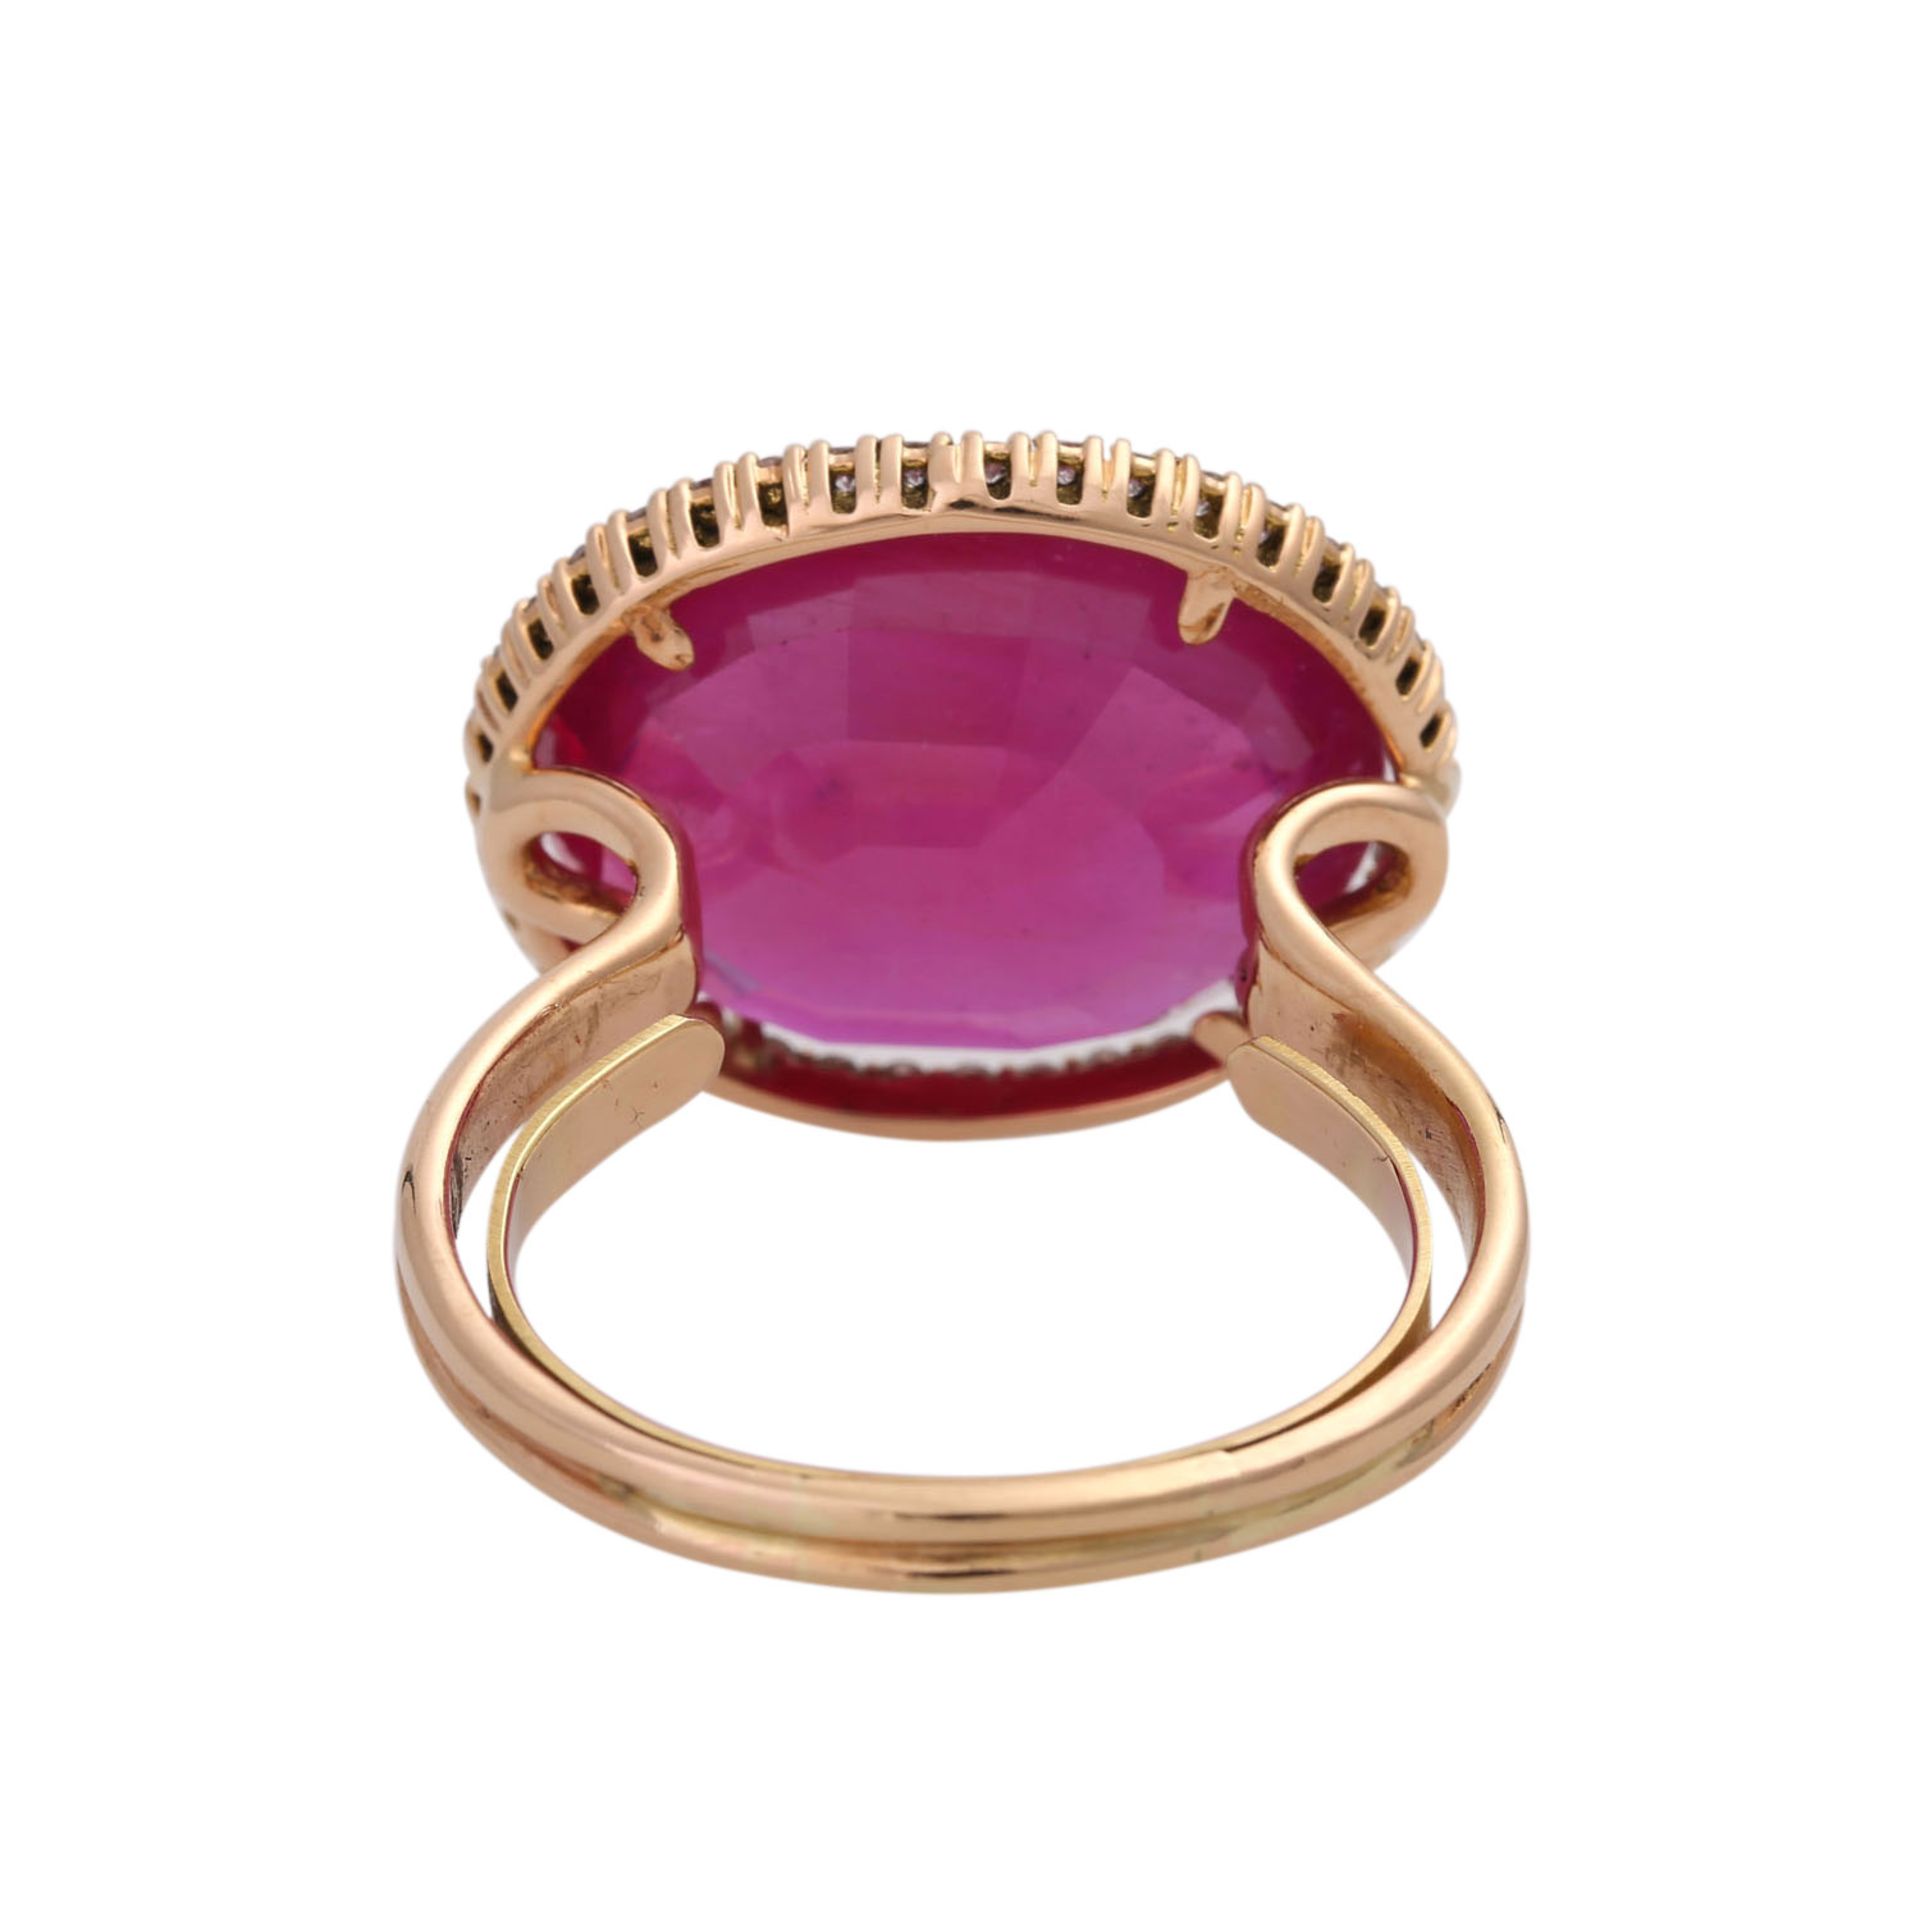 Ring mit Compositrubin in Umrandung aus kl. Diamanten,Roségold 18K, RW ca. 60 (mit - Image 4 of 4